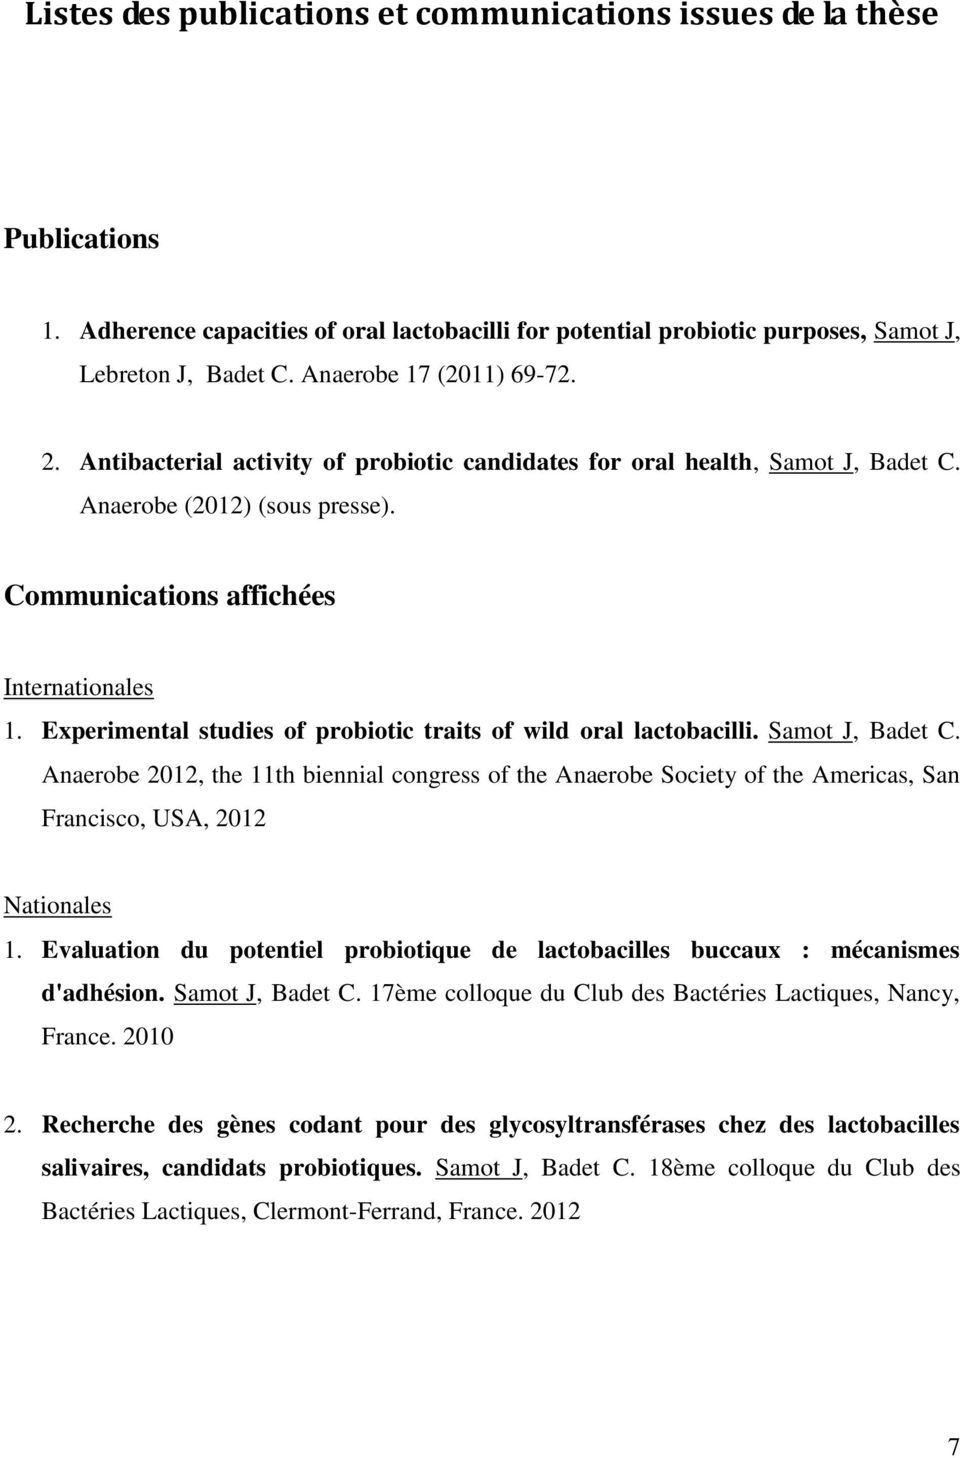 Experimental studies of probiotic traits of wild oral lactobacilli. Samot J, Badet C.